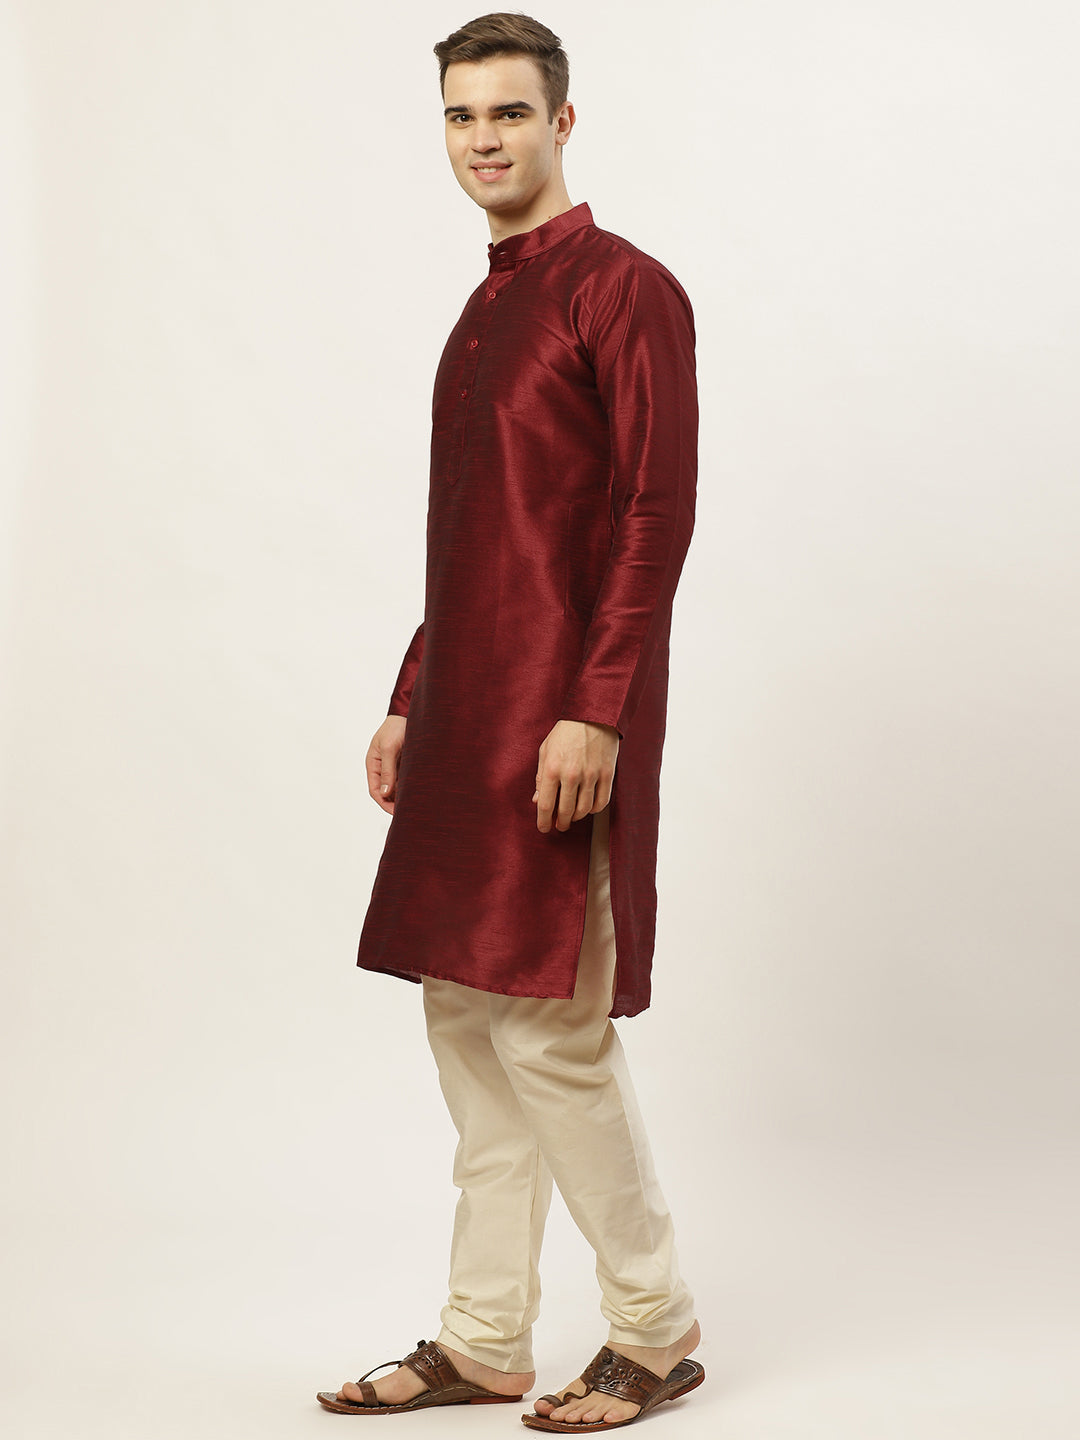 Men's Printed Nehru Jacket and Kurta Pyjama Set